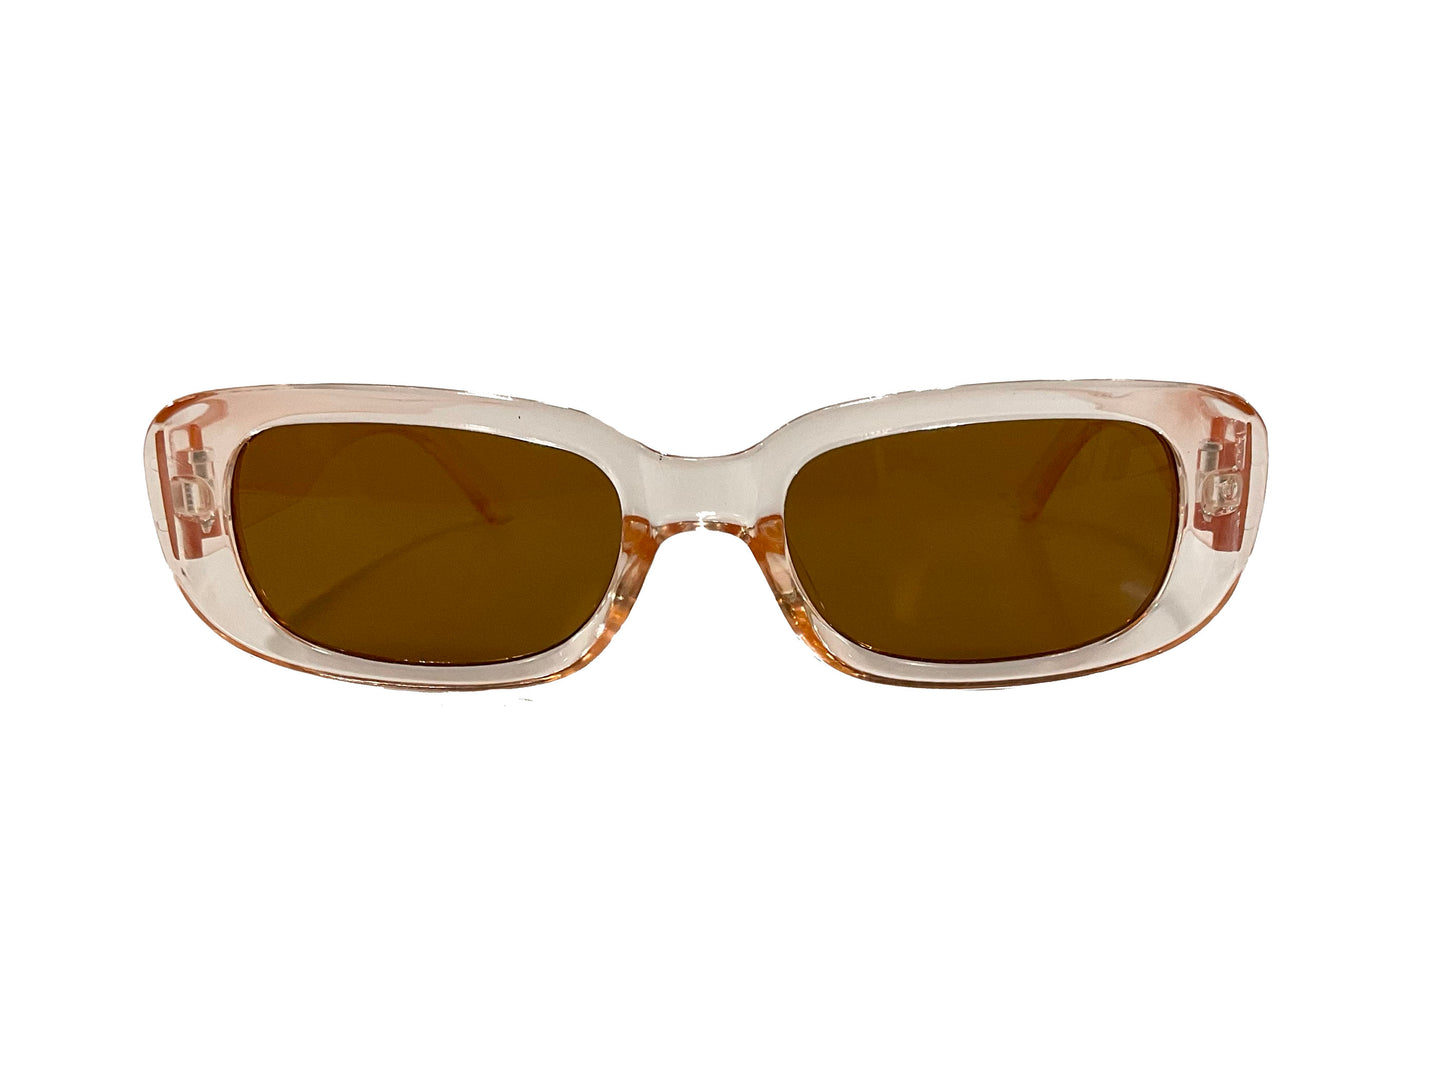 Sunglasses #59-4024